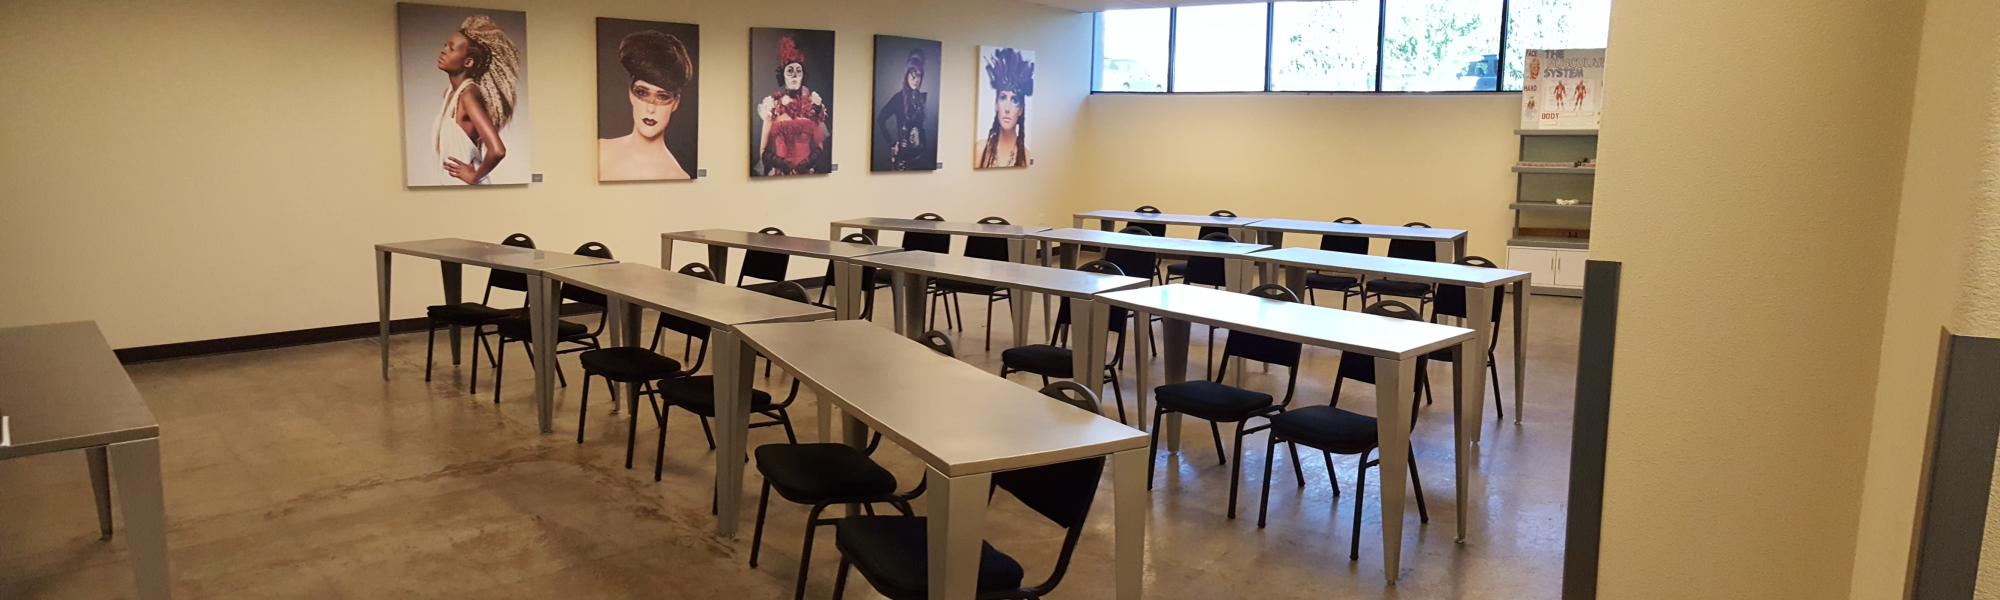 Classroom, Aveda Institute Portland, Vancouver Campus